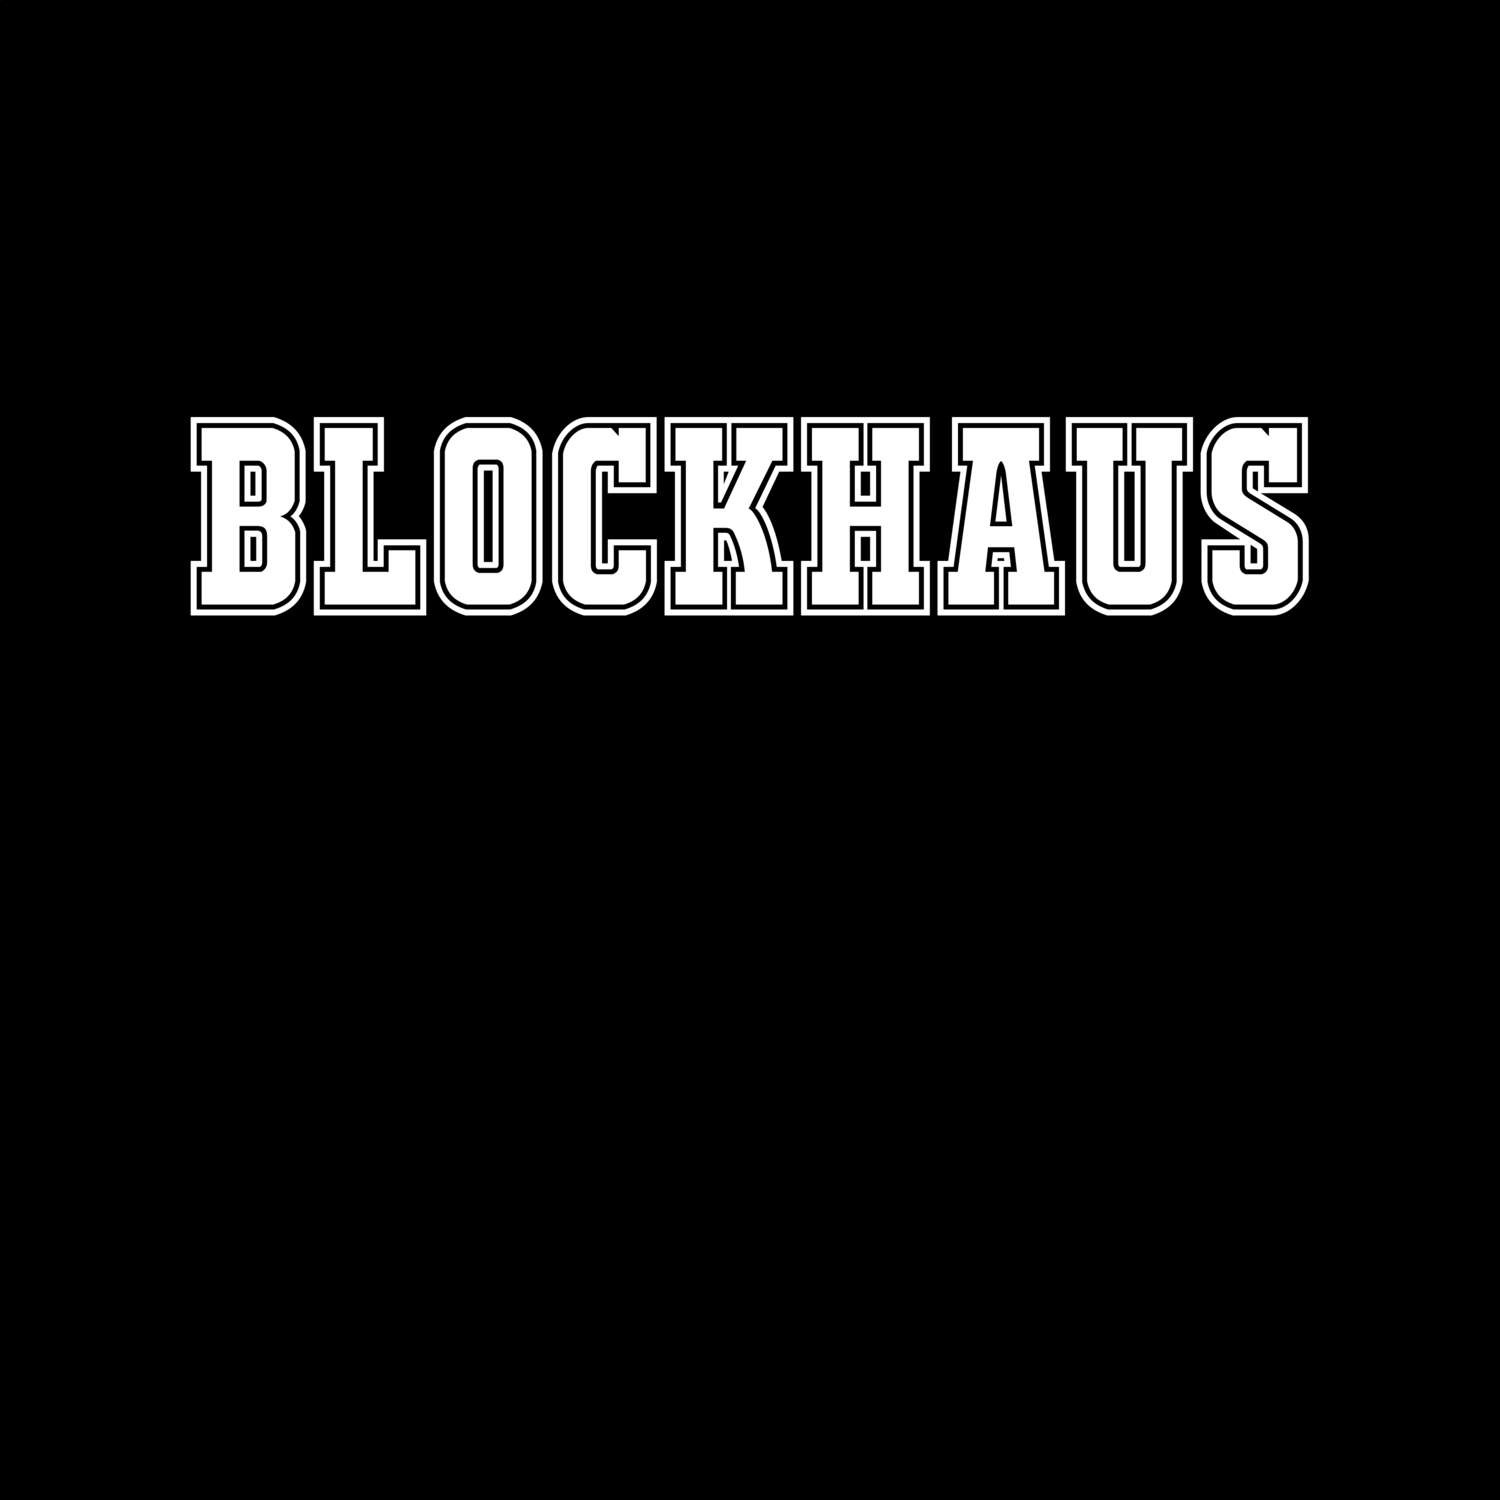 Blockhaus T-Shirt »Classic«